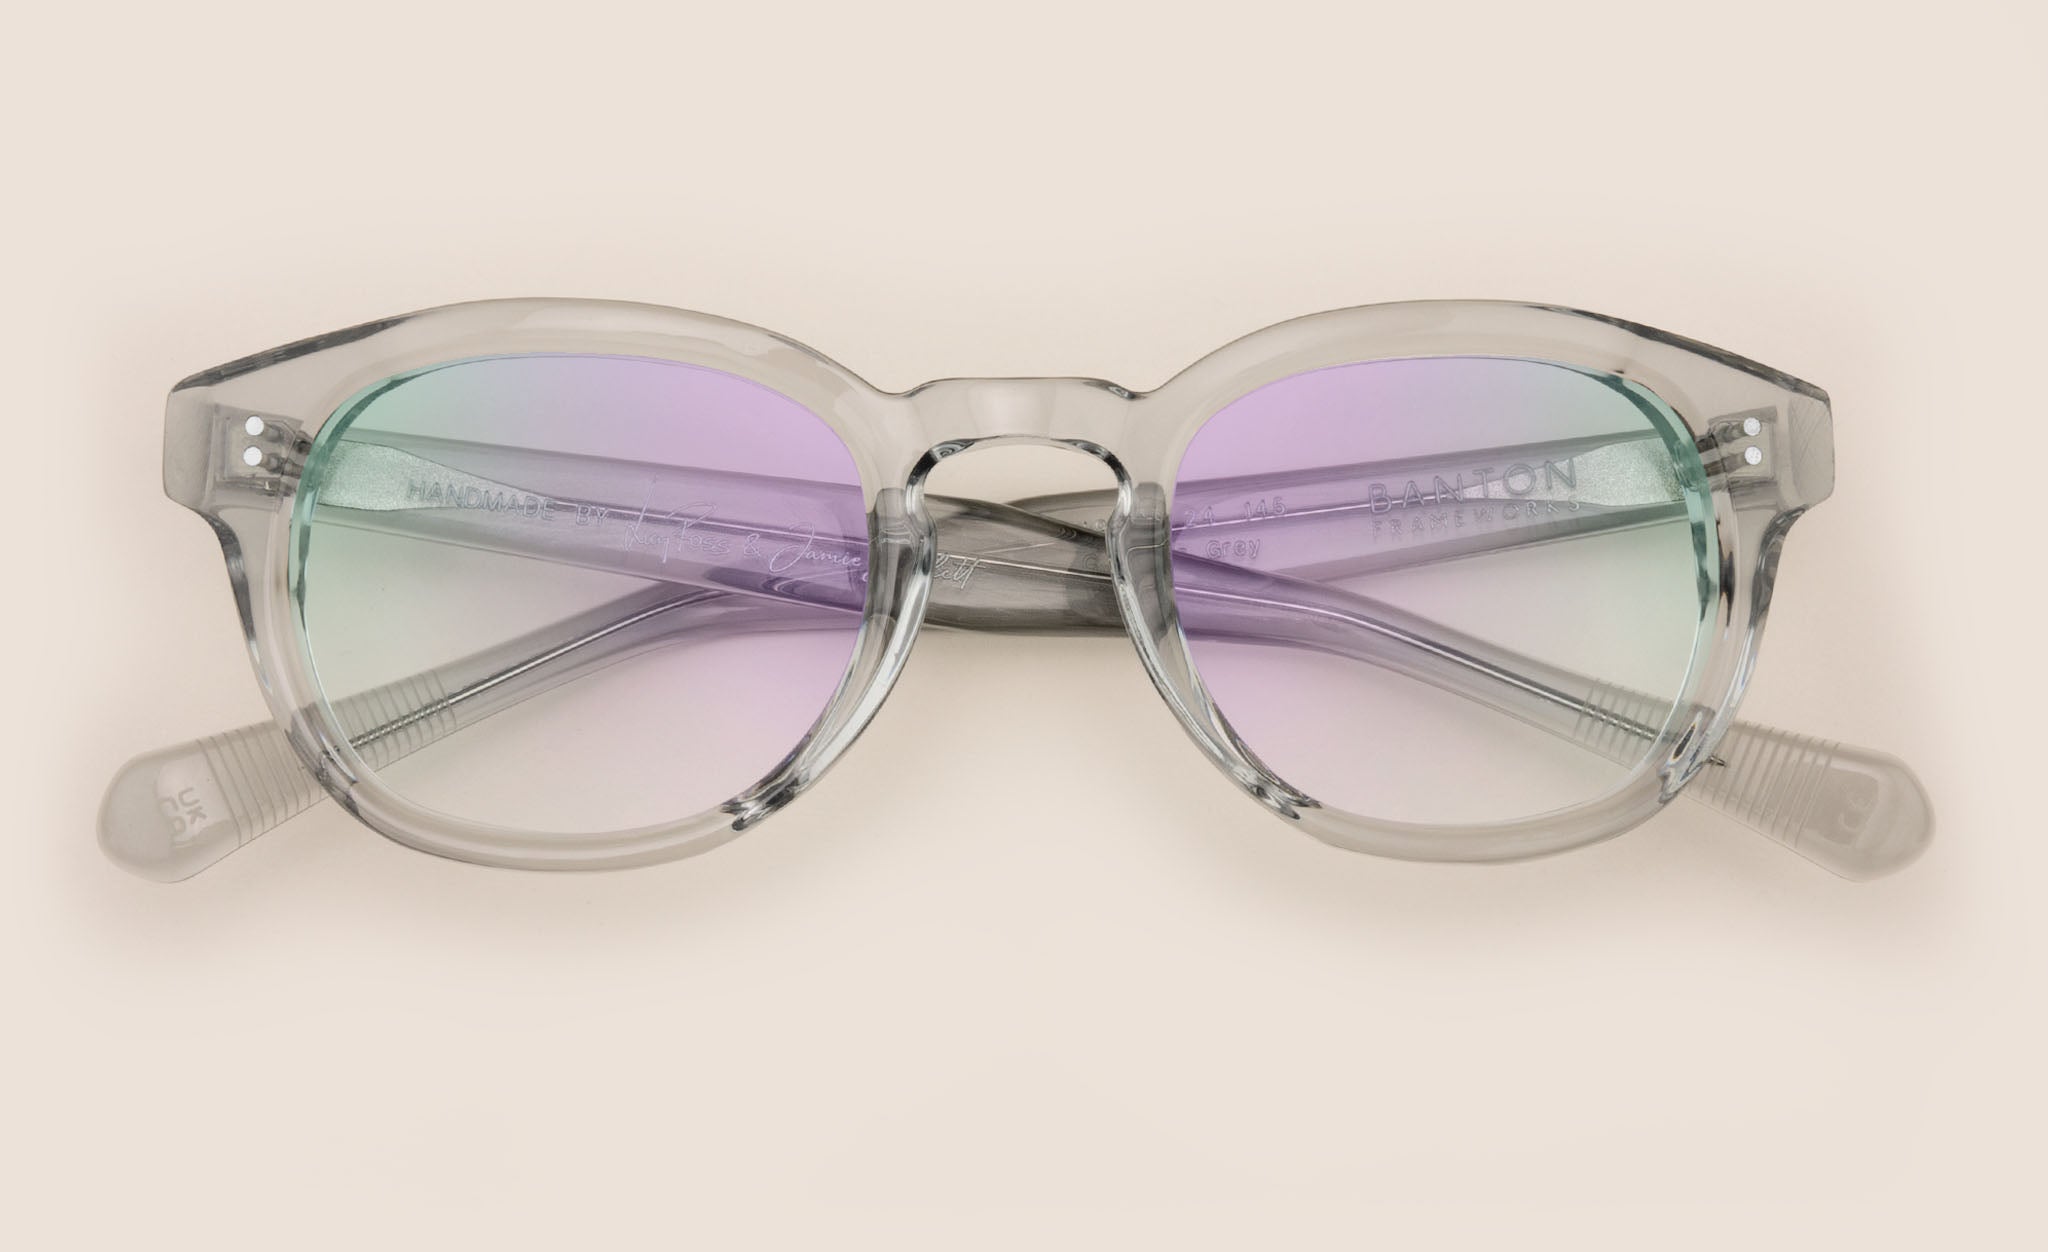 Oval shape clear frame eyeglasses